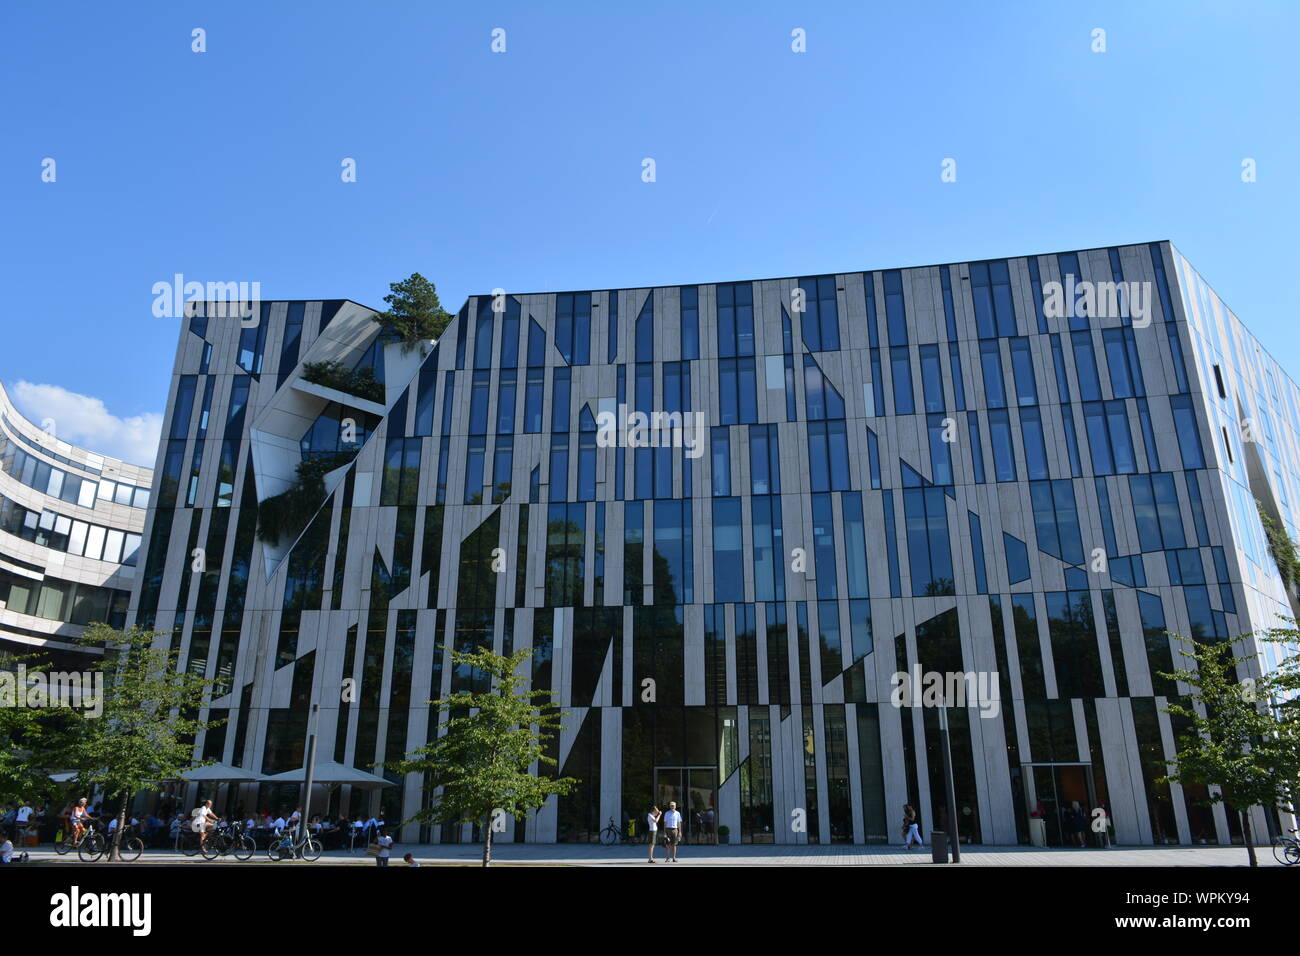 Kö-Bogen building in the Beautiful city of Duesseldorf in Germany Stock Photo